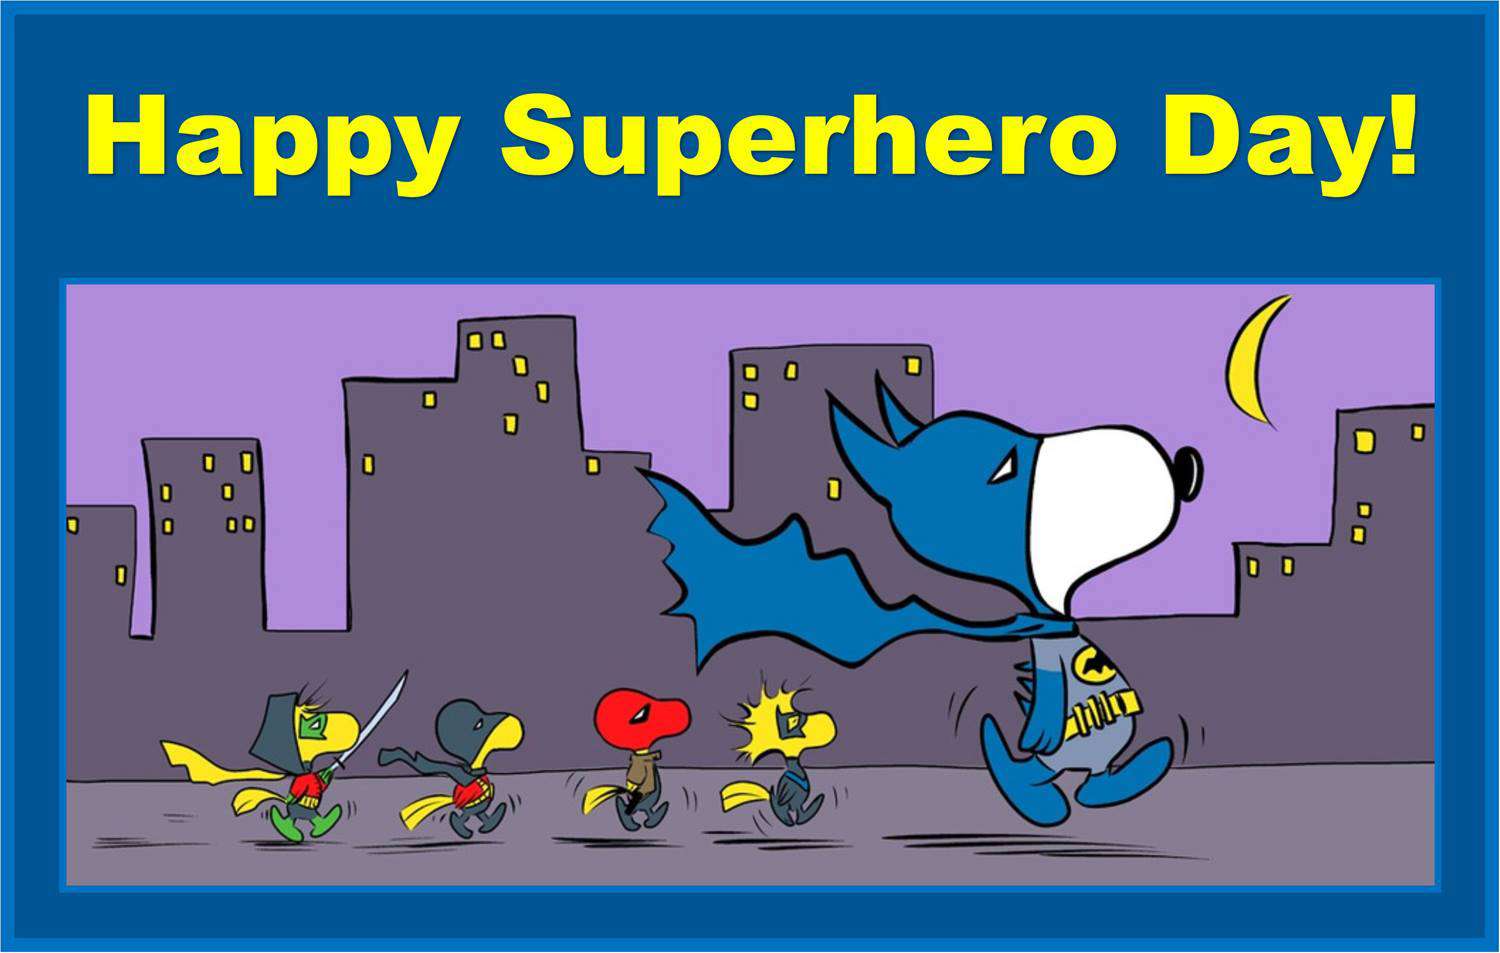 National Superhero Day Wishes Beautiful Image